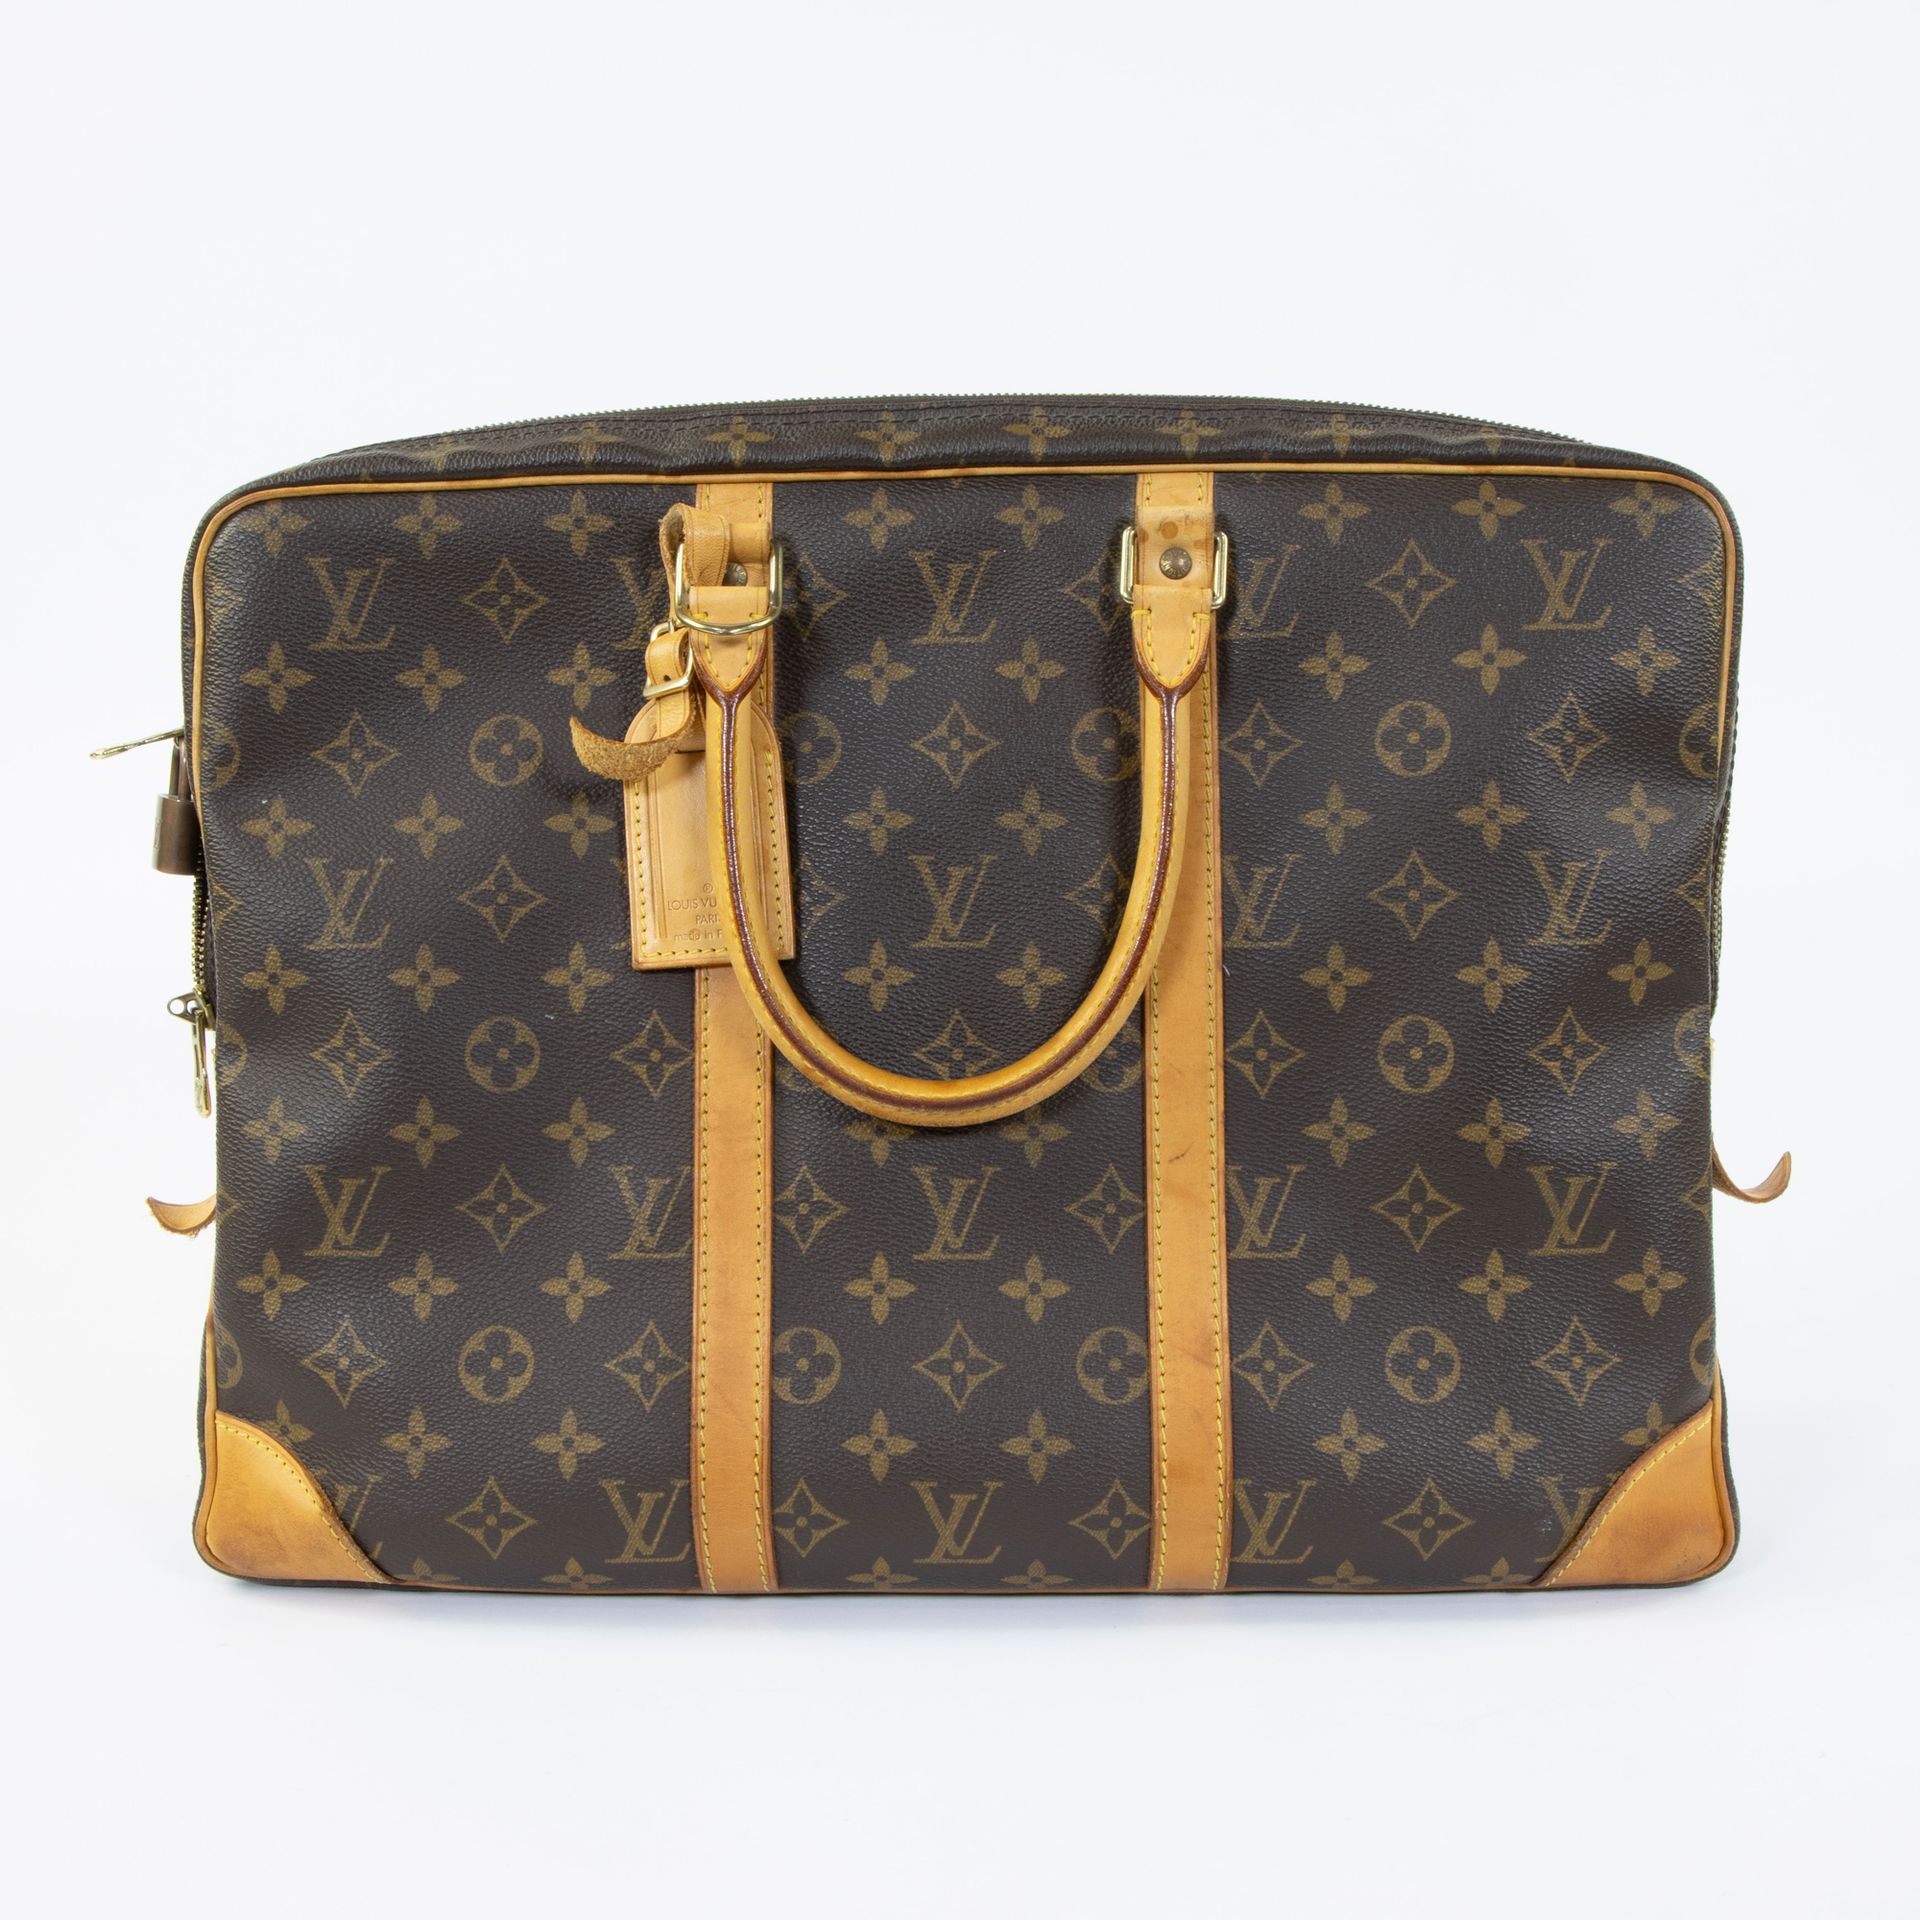 Null Petit sac de voyage Louis Vuitton
Louis Vuitton kleine reistas
32 x 41 x 11&hellip;